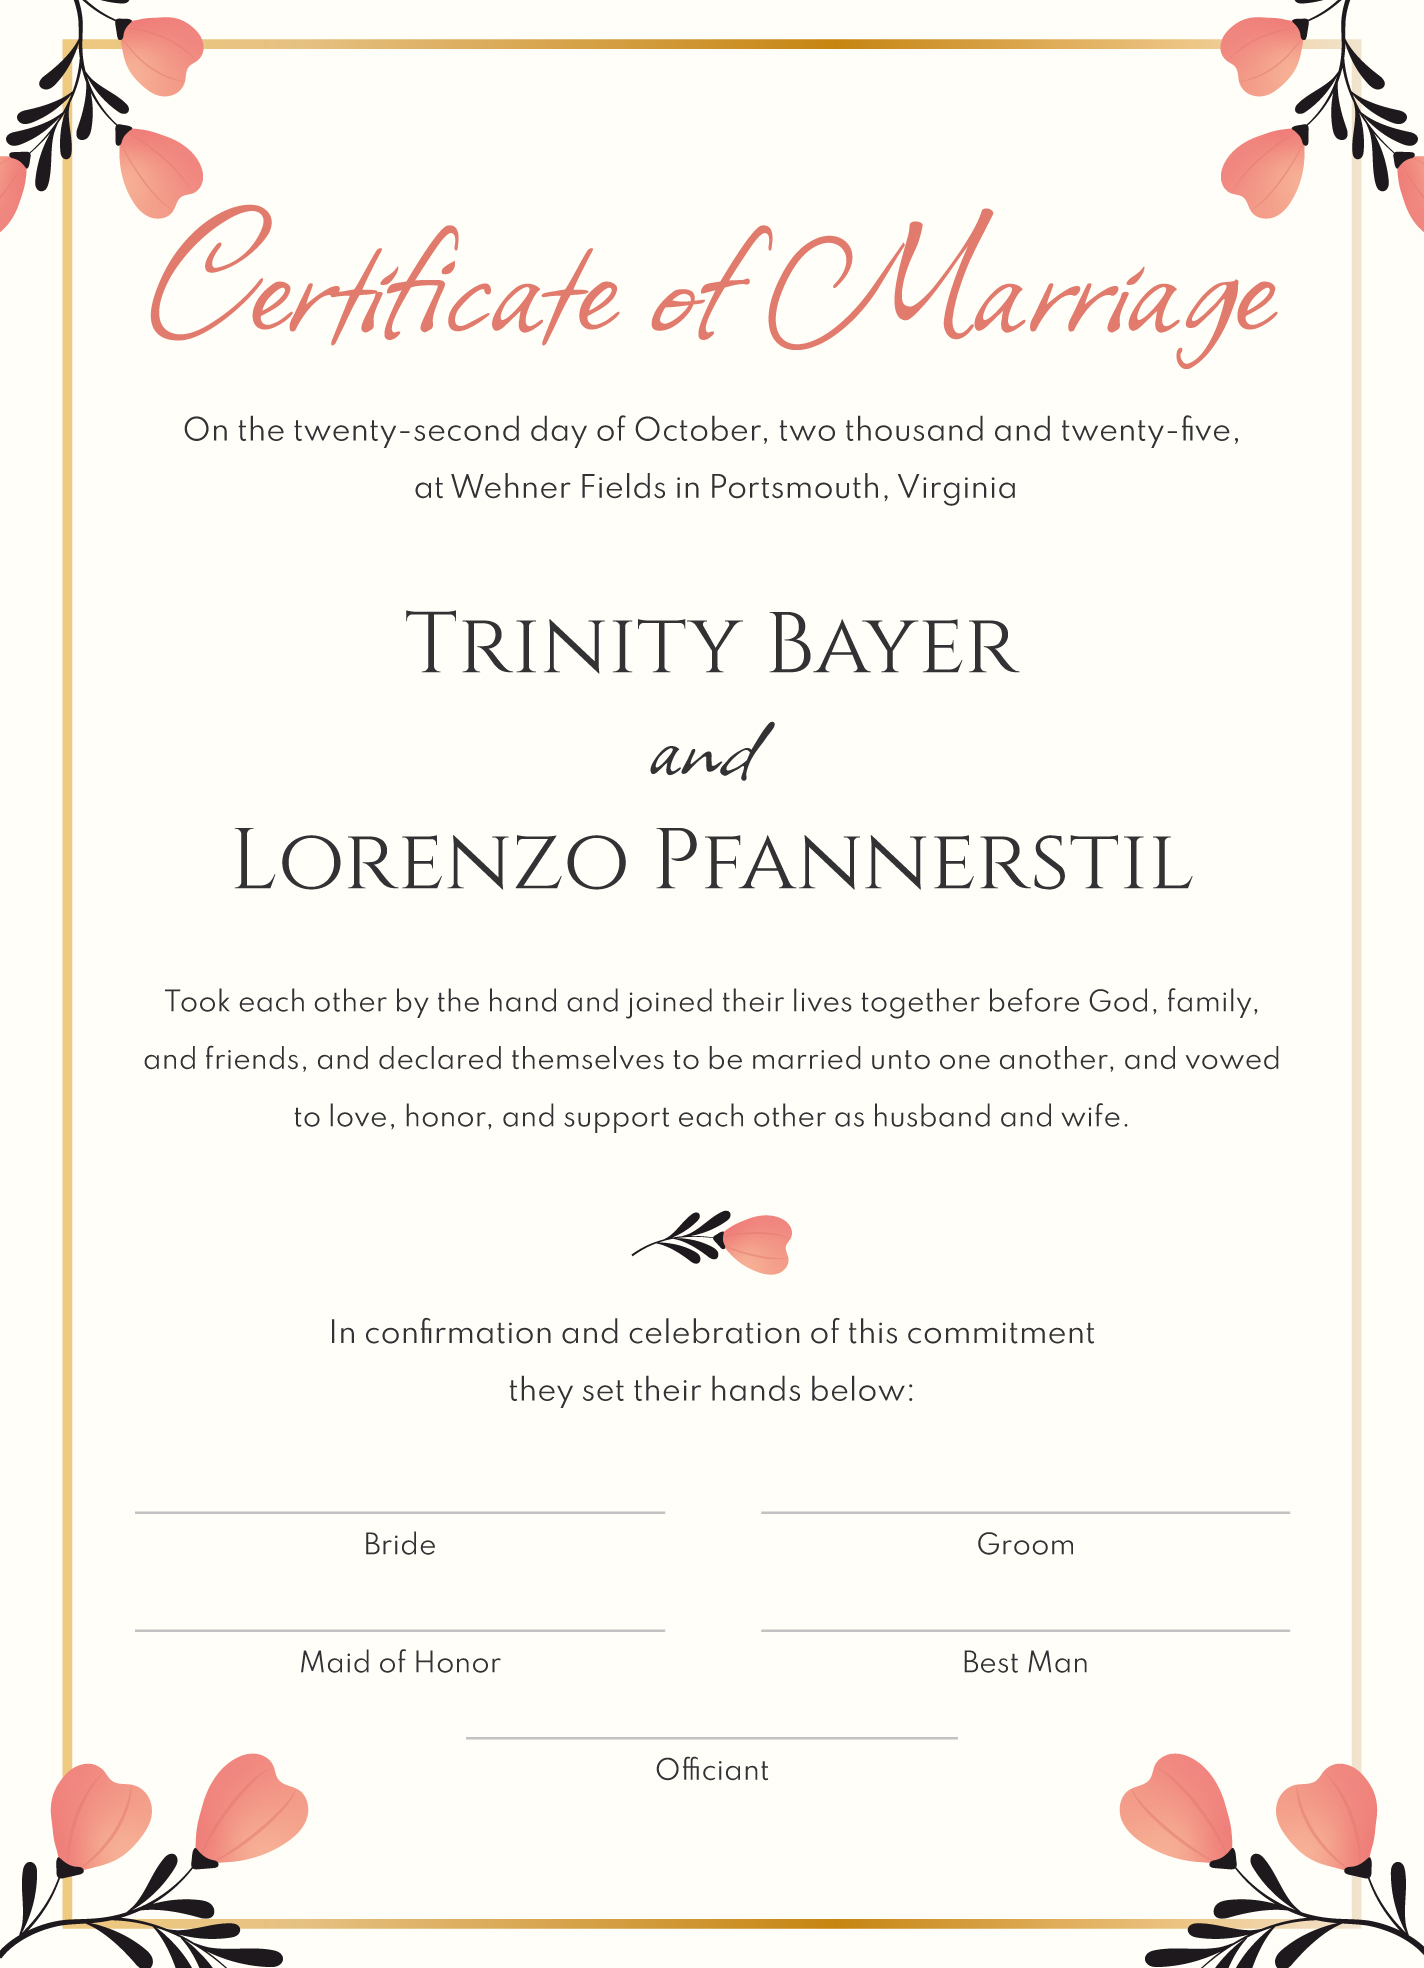 Fake Marriage Certificate Free Google Docs Template - gdoc.io